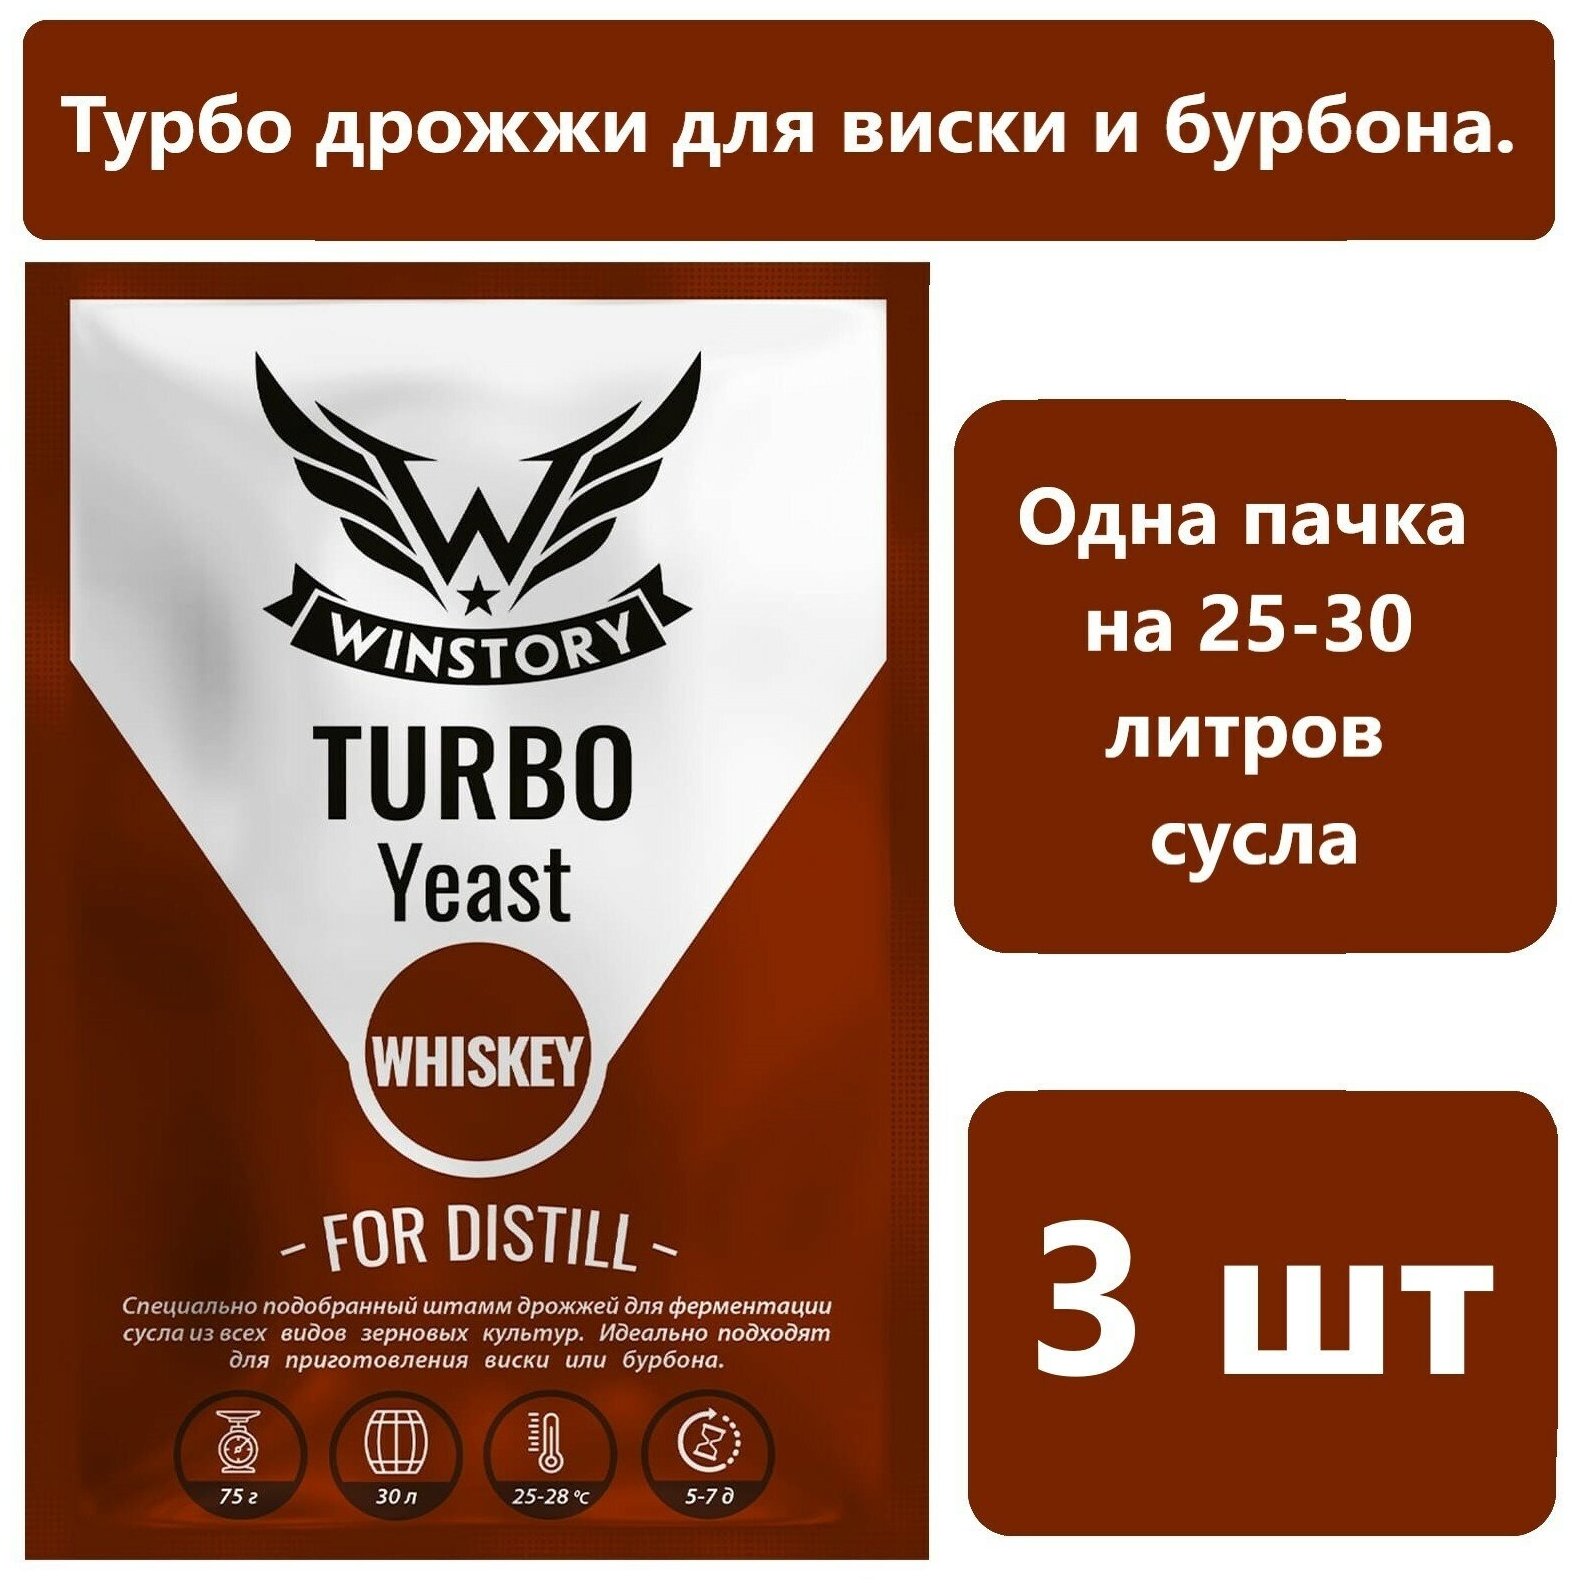 Турбо дрожжи для виски WINSTORY TURBO WHISKEY, 75 гр /дрожжи для самогона/turbo дрожжи/ (комплект из 3 шт)